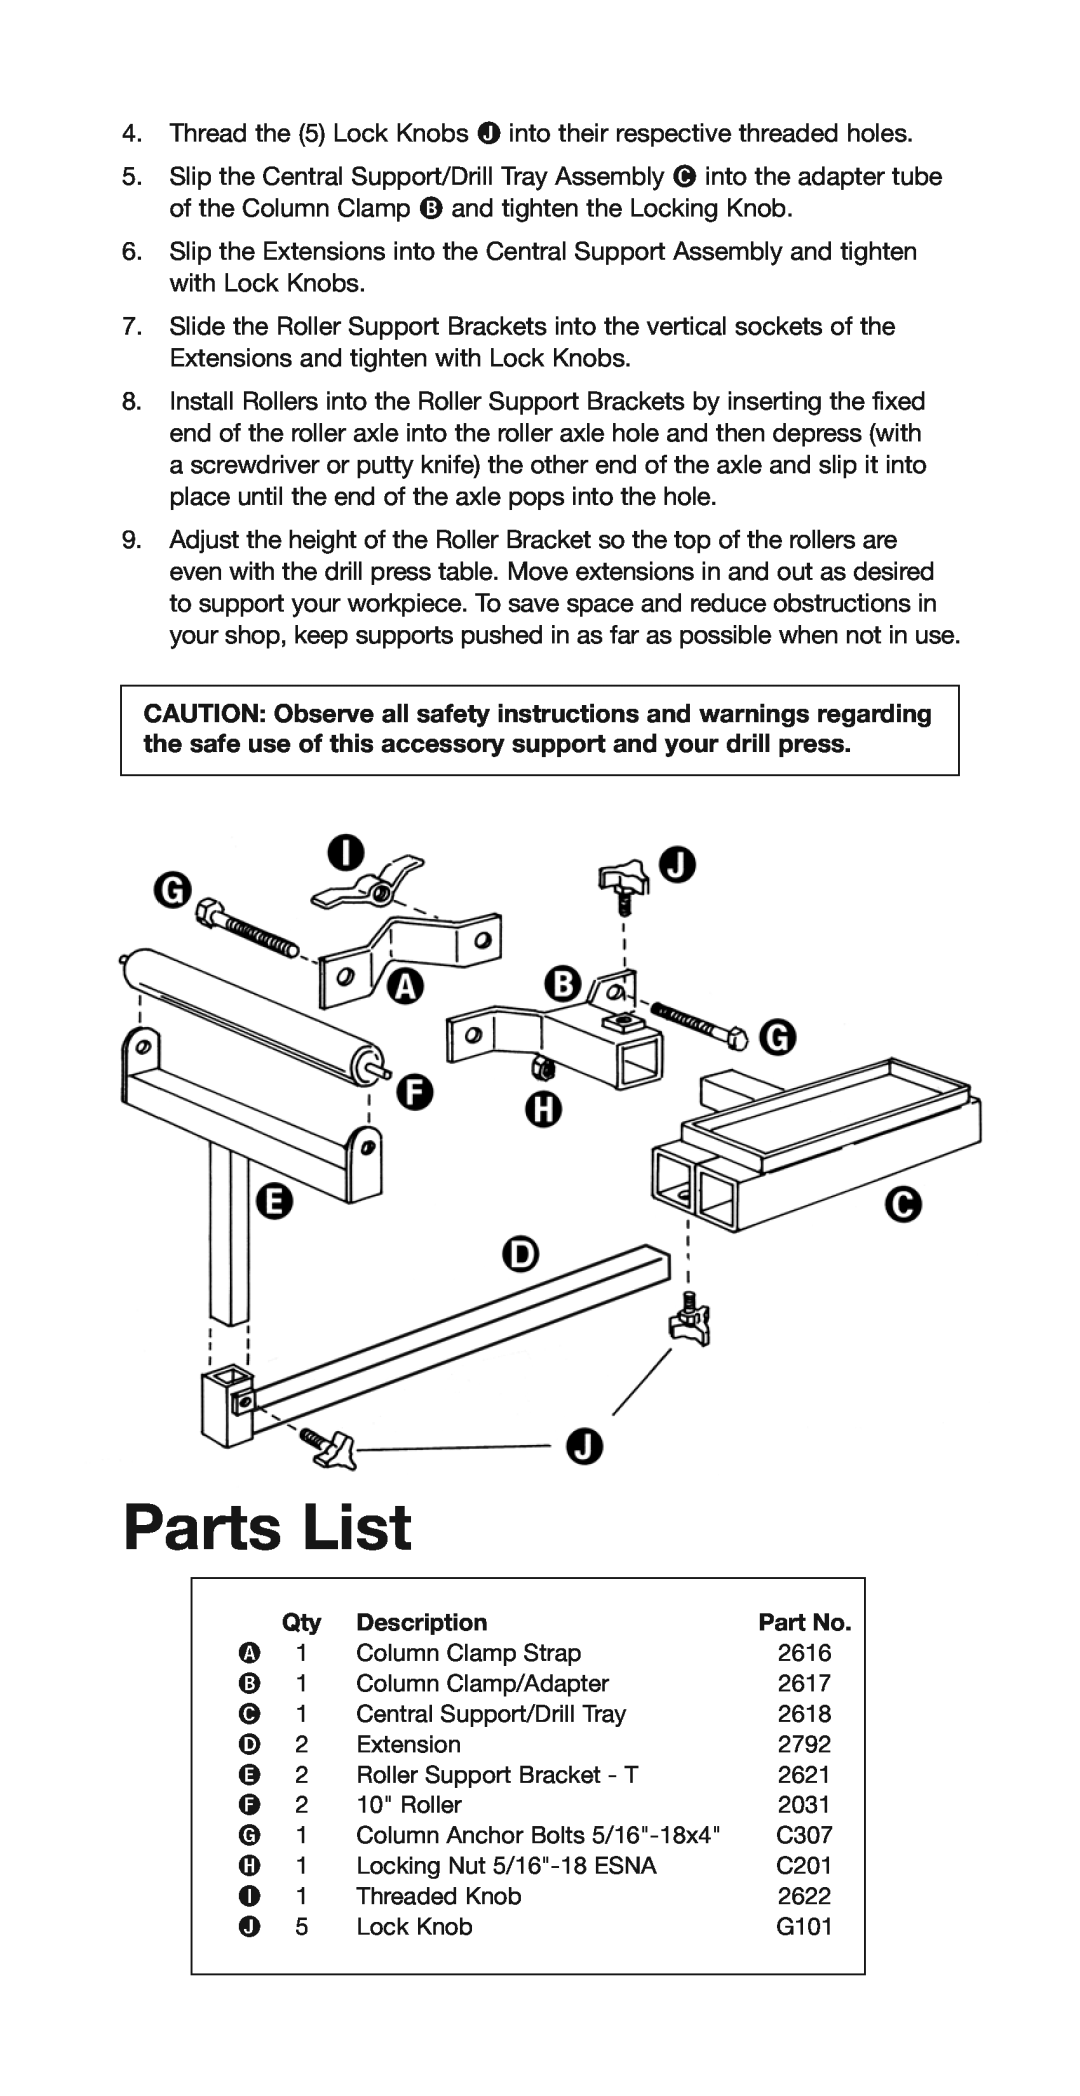 HTC PM-128 manual Parts List 